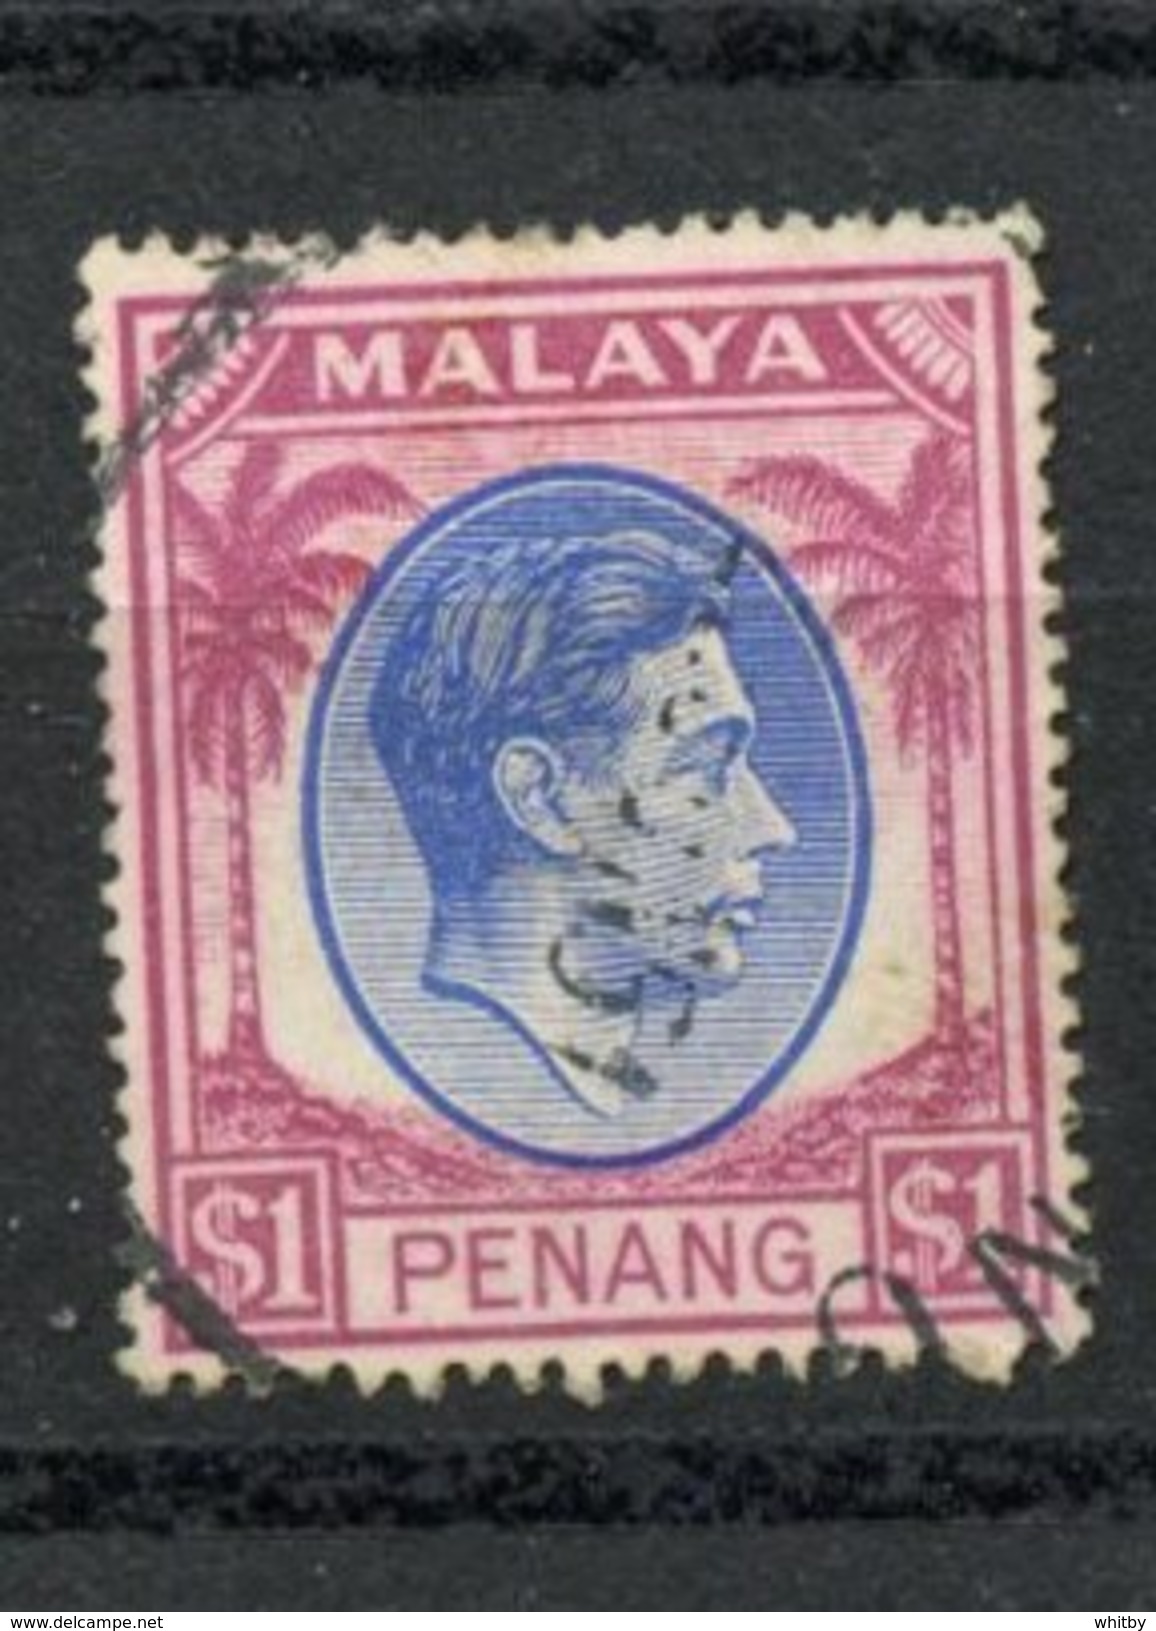 Malaya Penang  1949 $1.00 King George Issue #20  Used - Penang